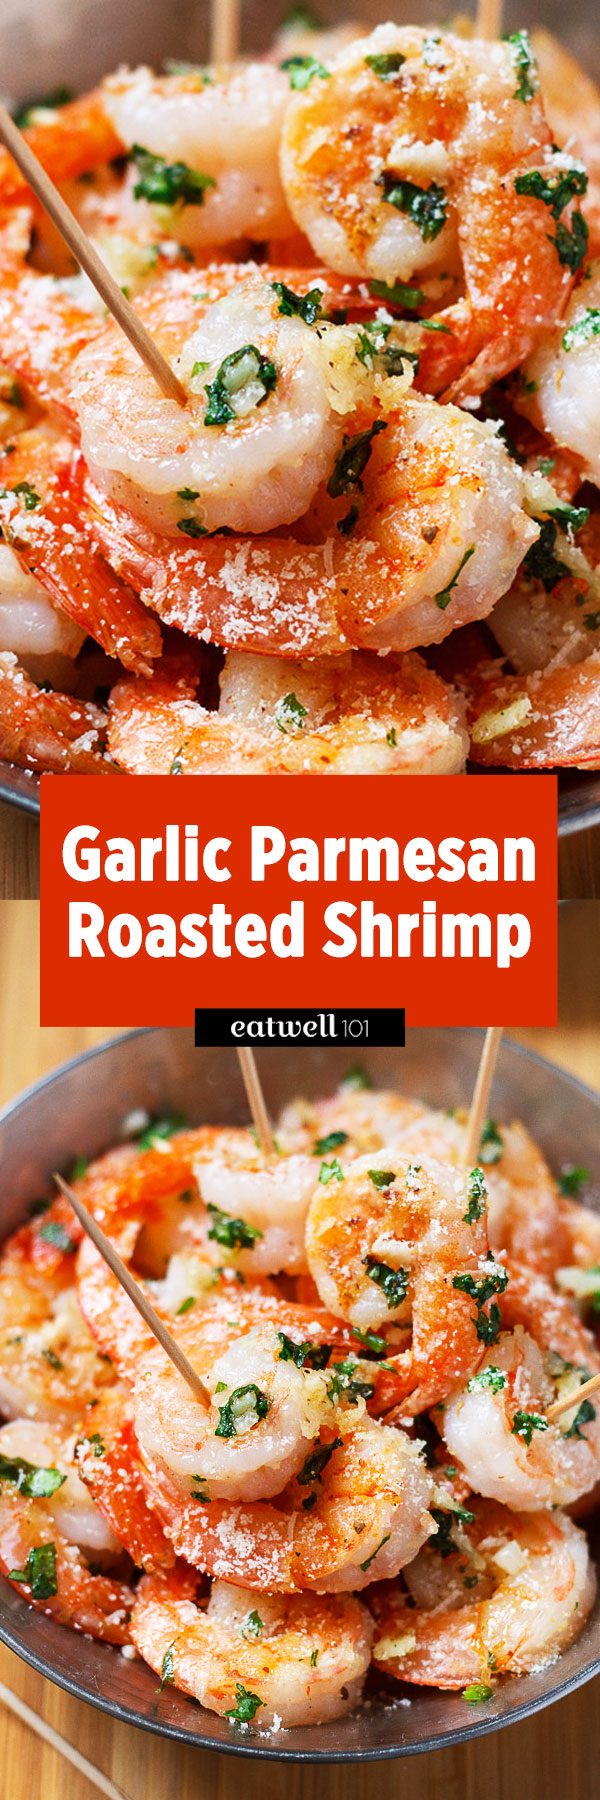 Garlic Parmesan Roasted Shrimp Recipe – Oven Baked Shrimp Recipe ...